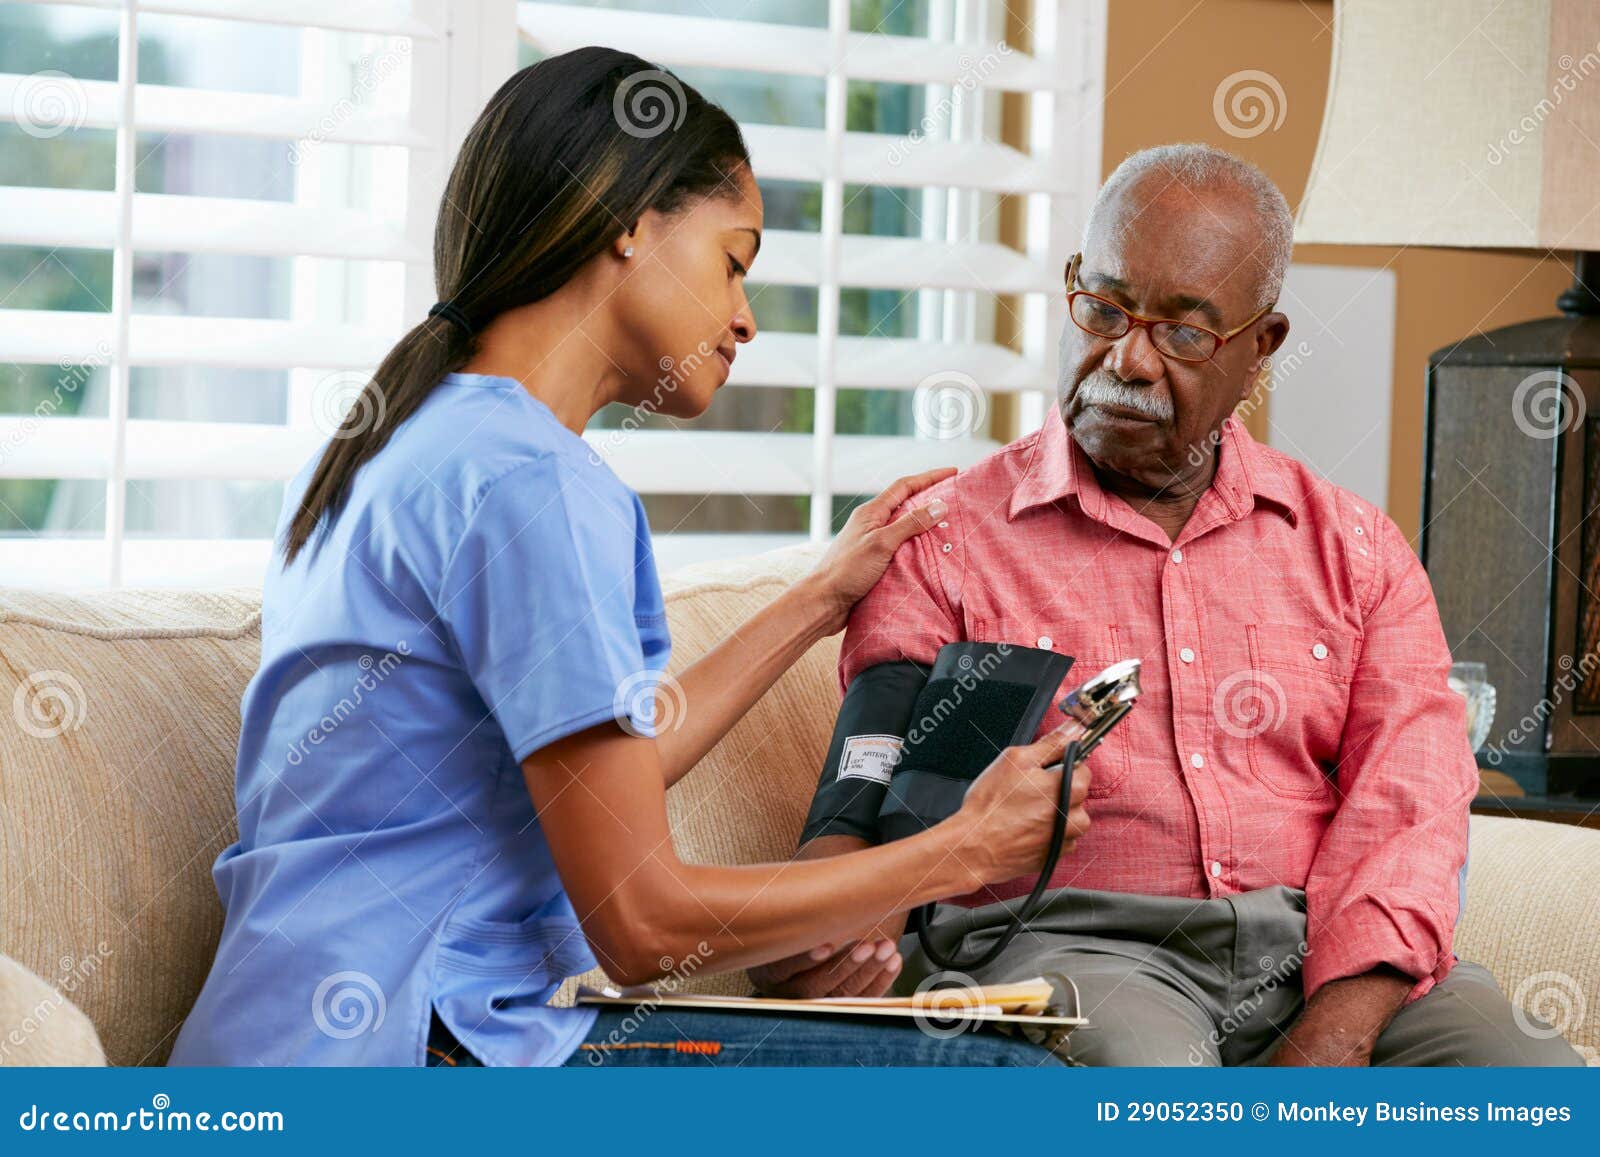 nurse visiting senior male patient at home